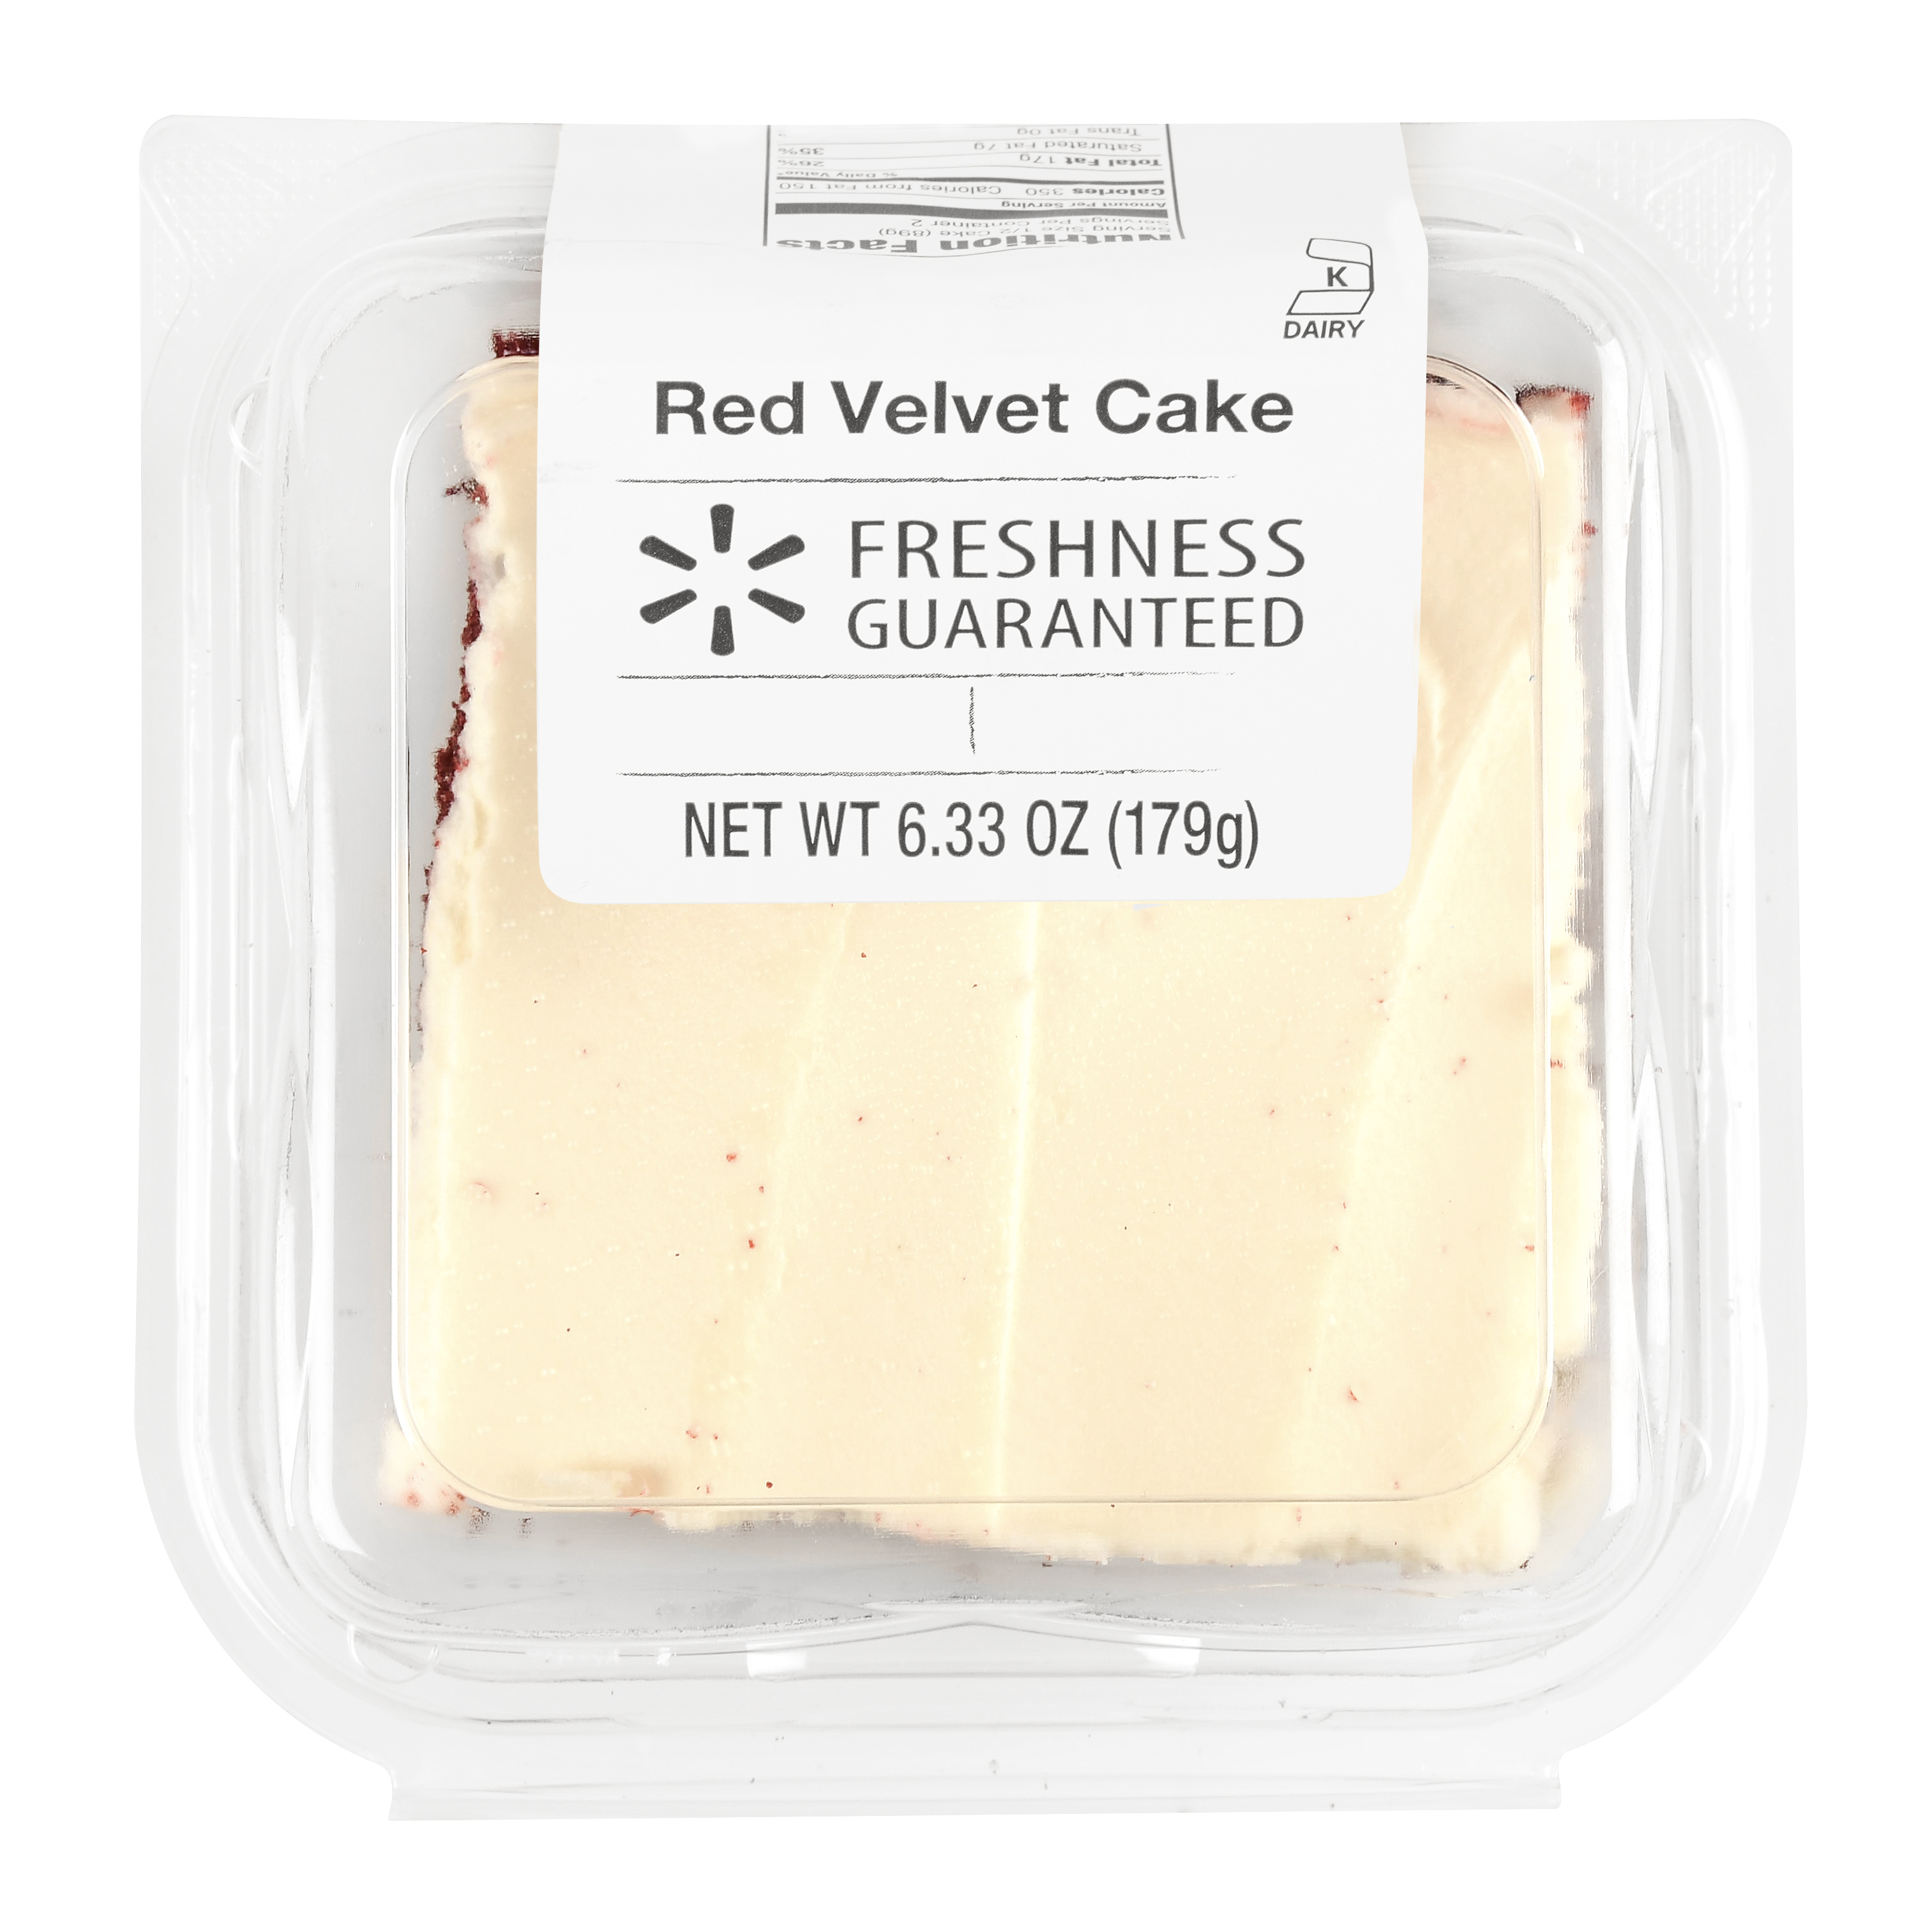 Freshness Guaranteed Red Velvet Cake, 6.33 Oz Image